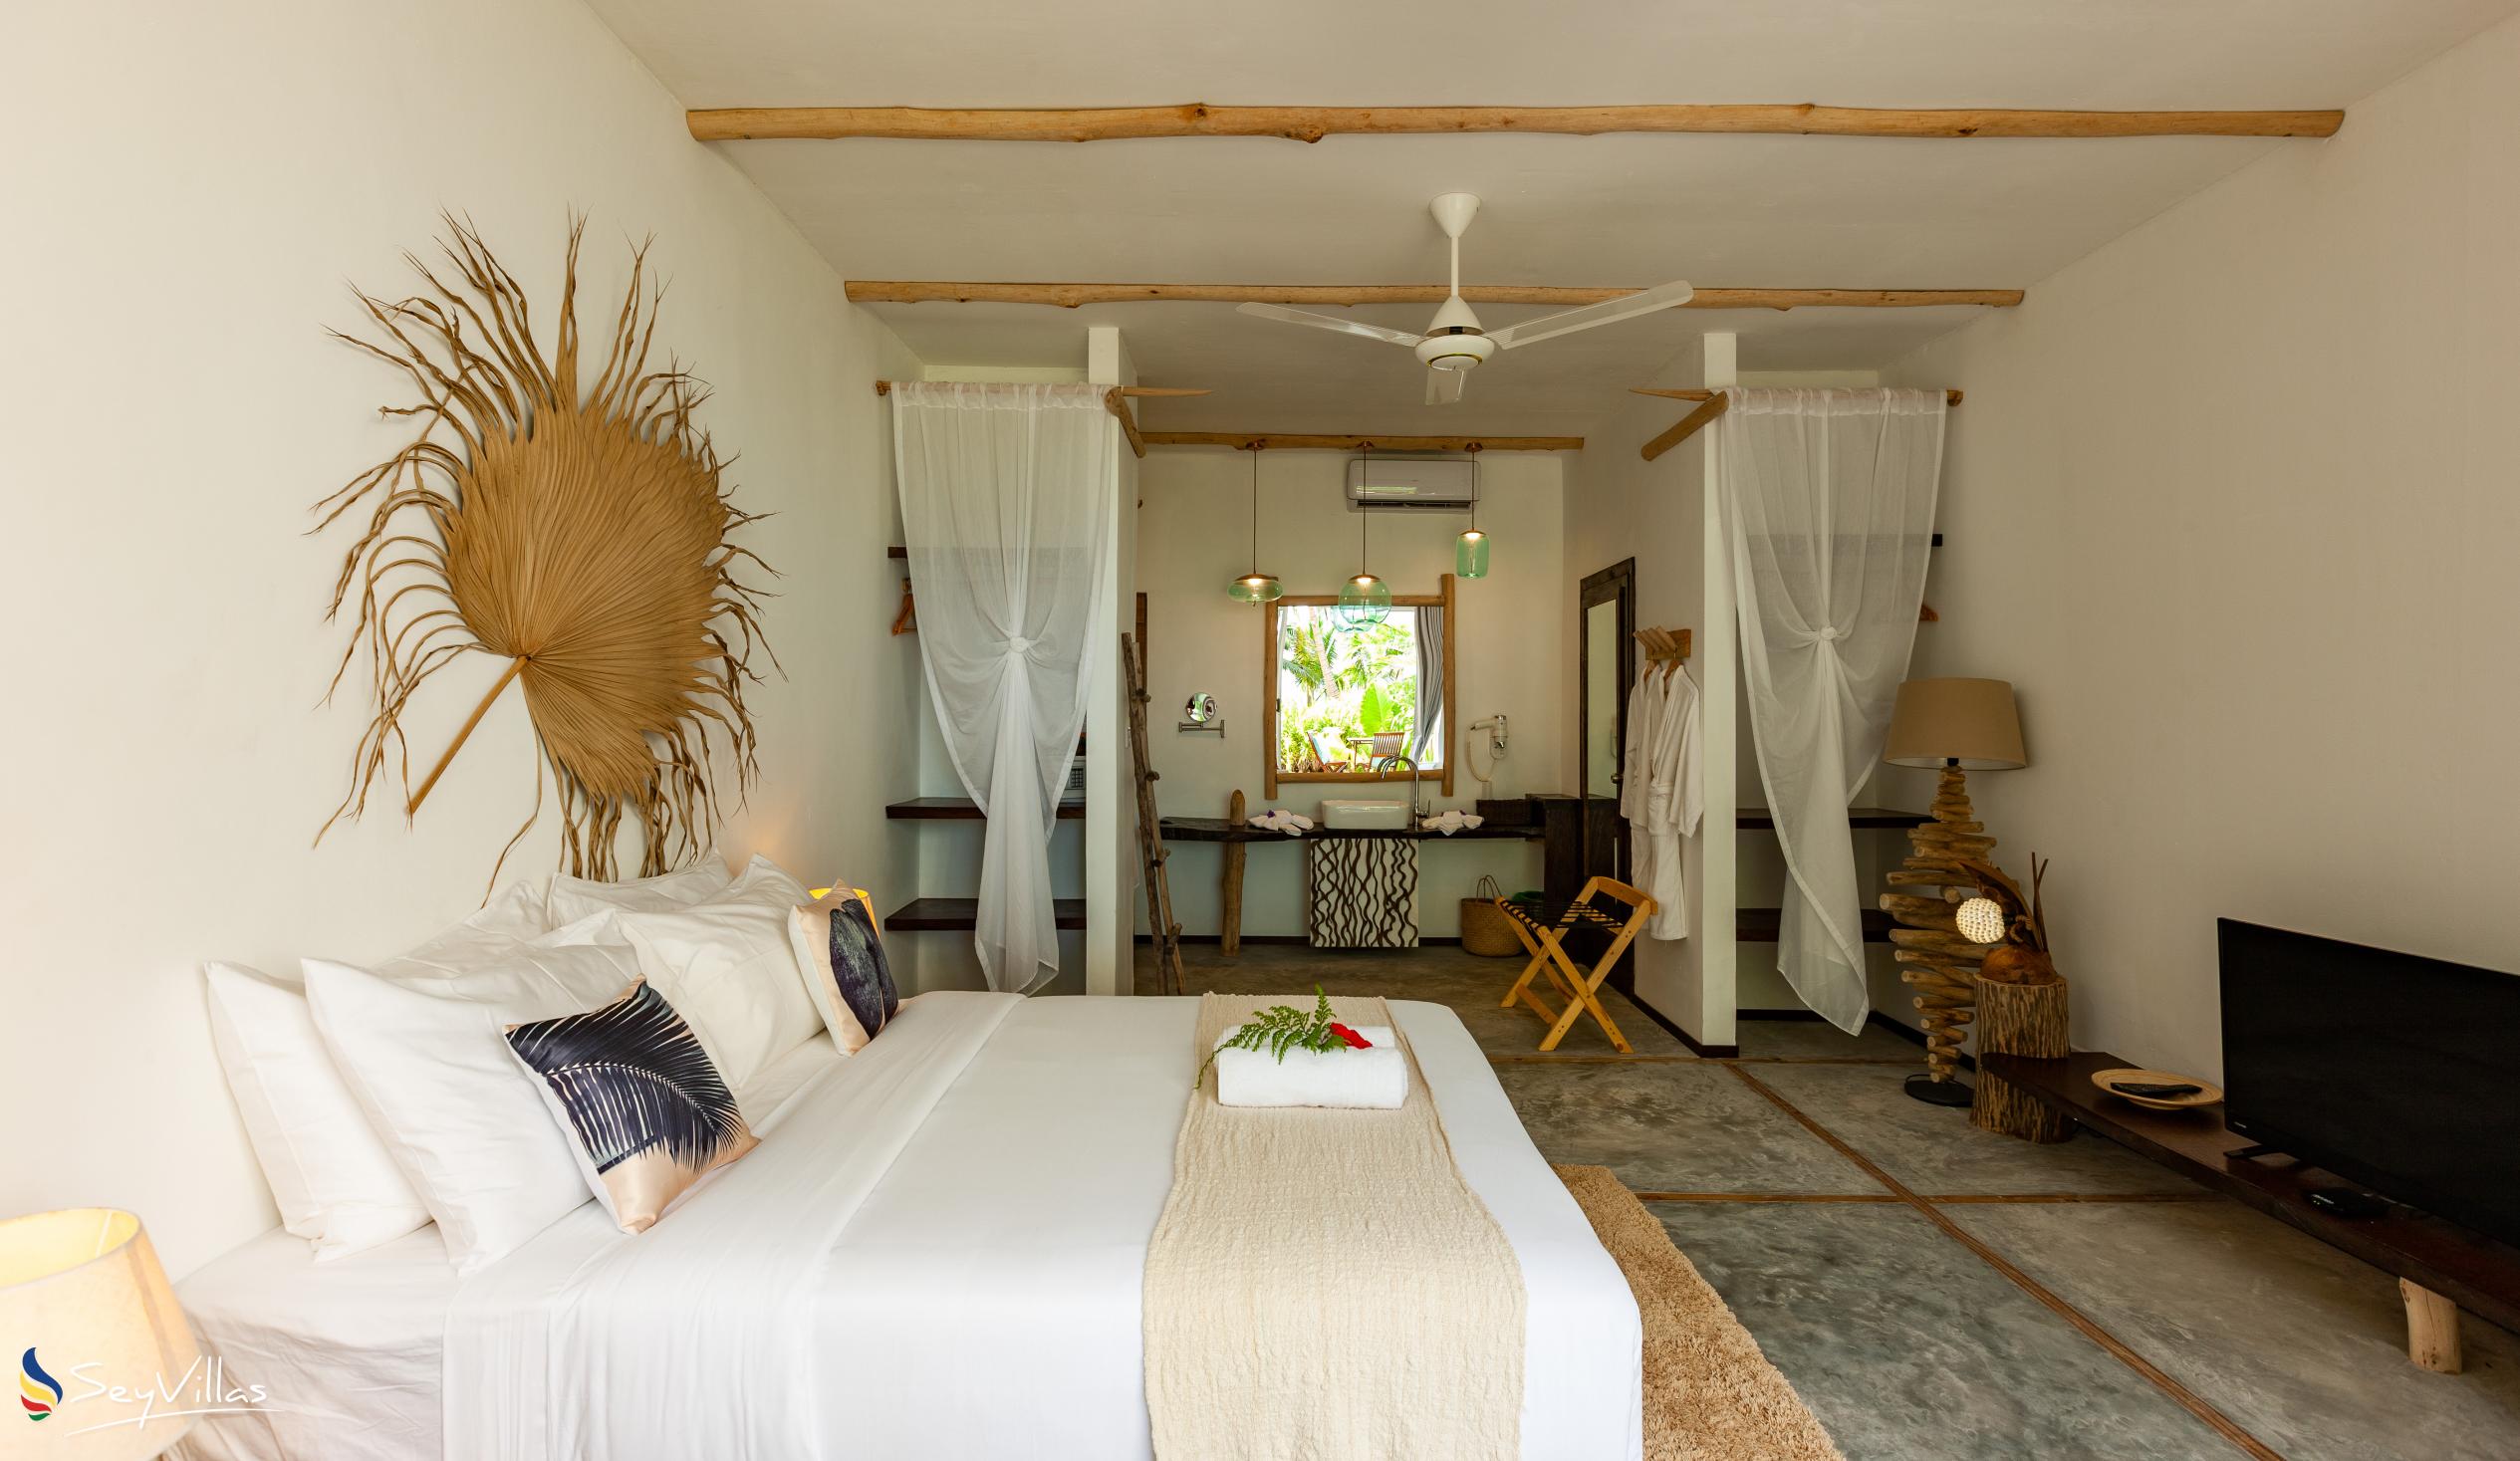 Photo 124: Bliss Hotel Praslin - Beach House - Beach Superior Room - Praslin (Seychelles)